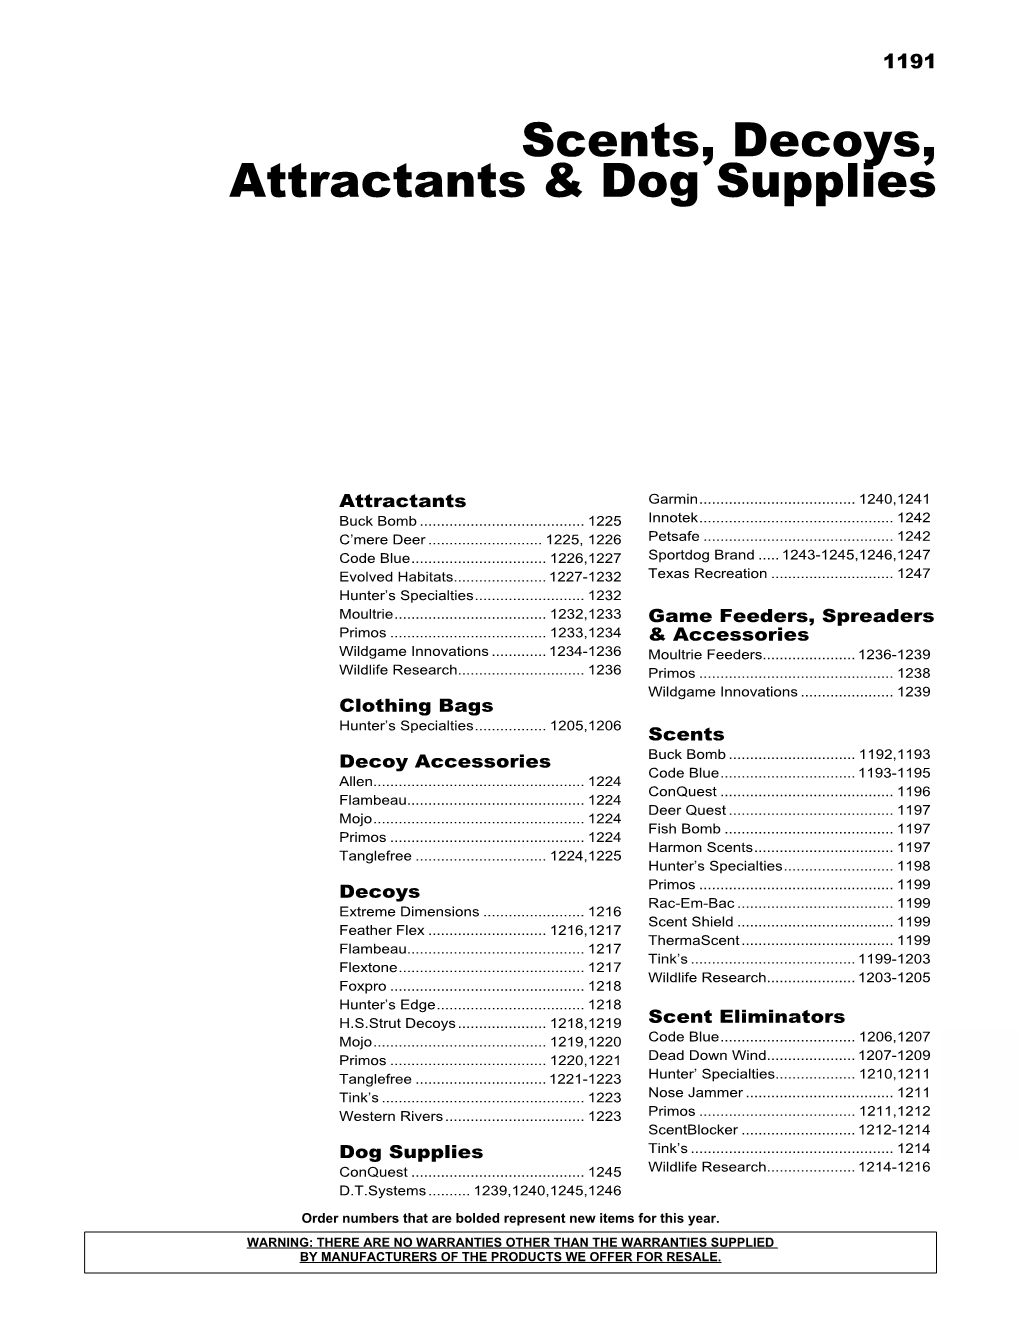 Scents, Decoys, Attractants & Dog Supplies